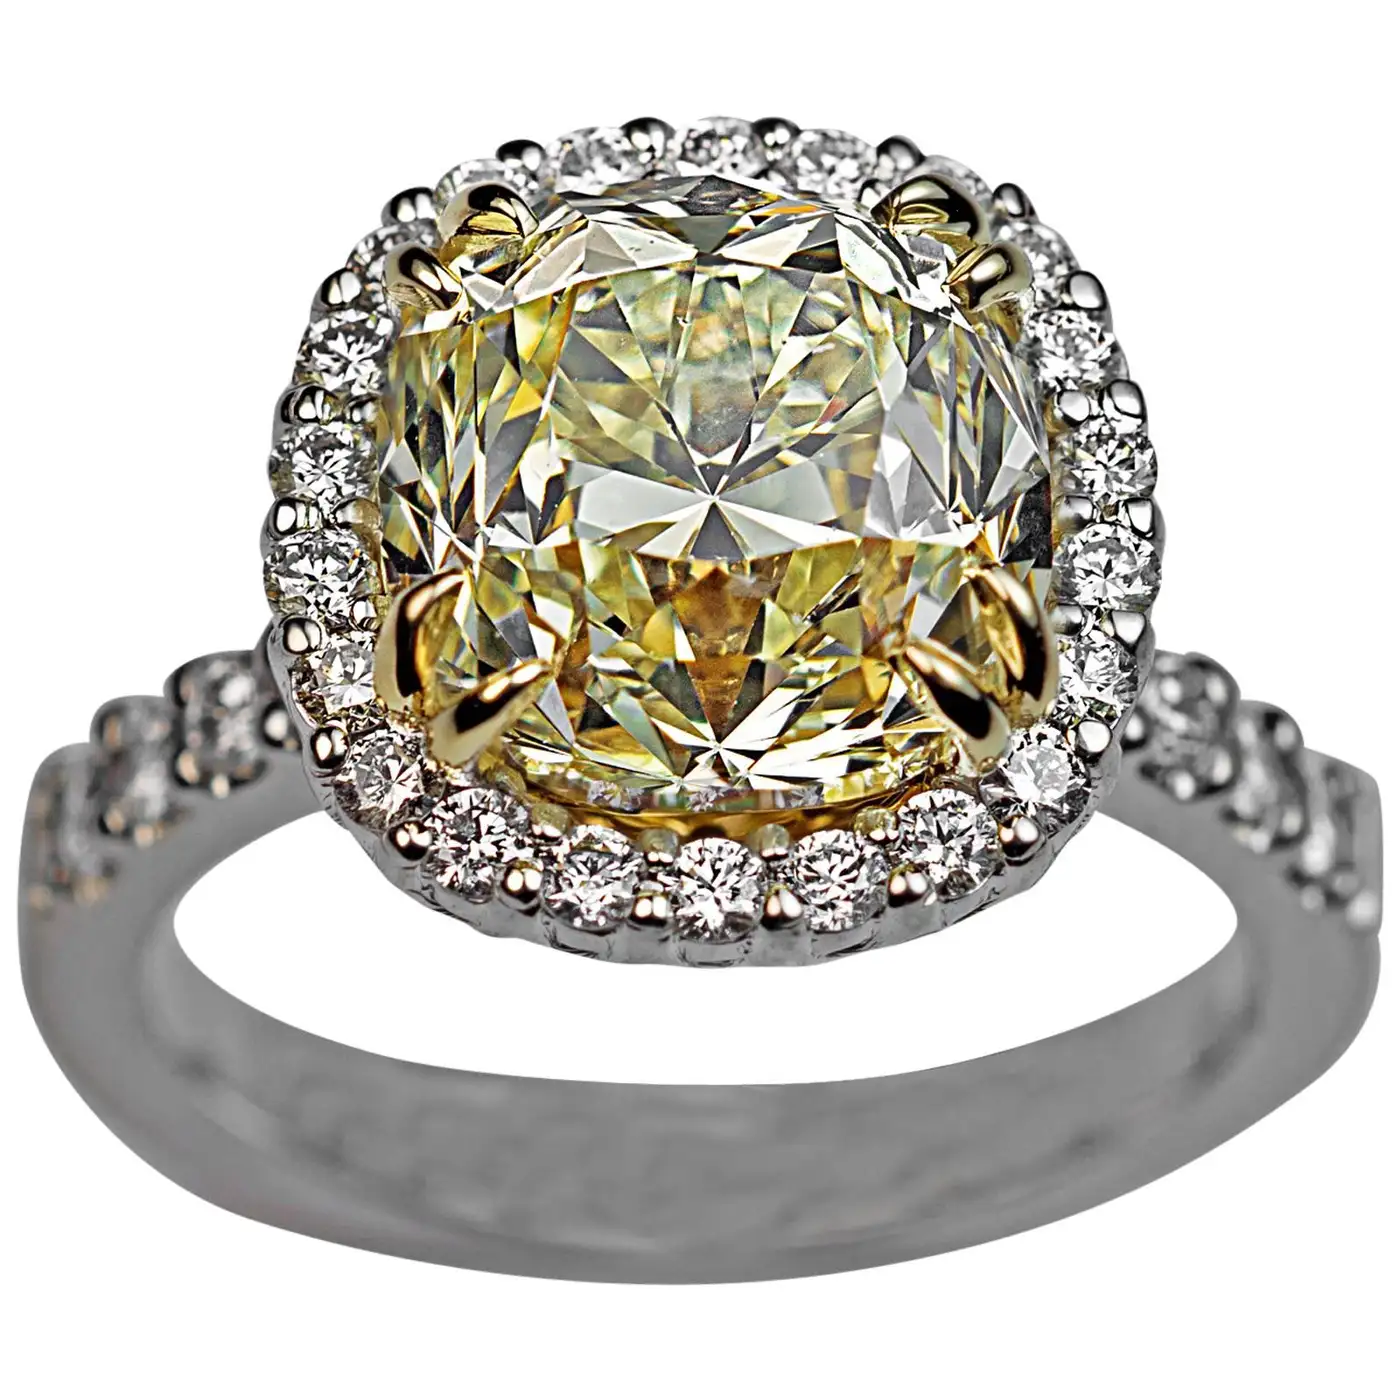 5.37-Carat-GIA-Fancy-Light-Yellow-Cushion-Cut-Diamond-Engagement-Ring-1.webp